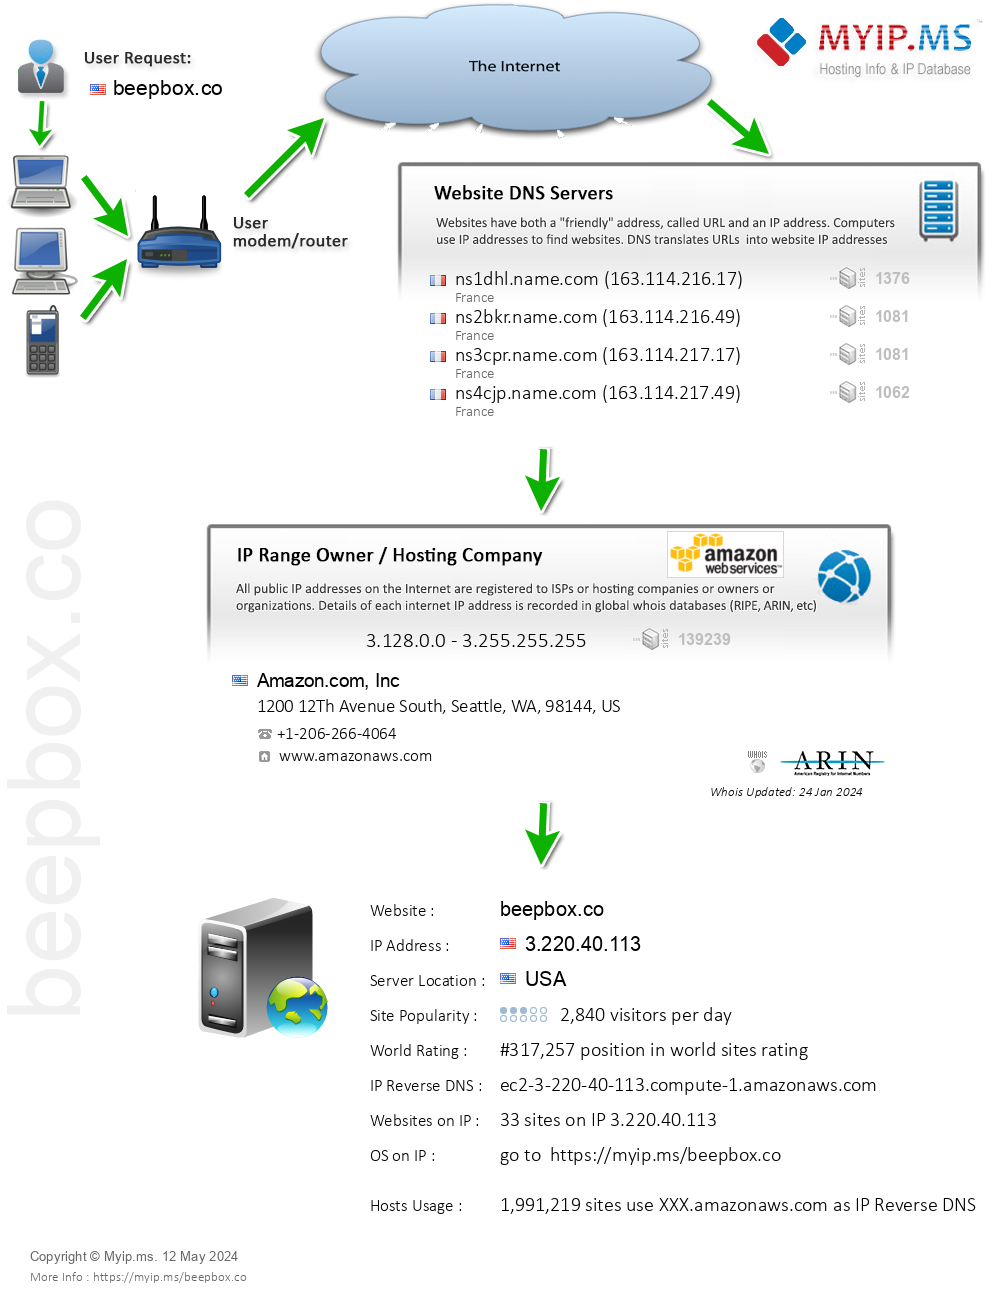 Beepbox.co - Website Hosting Visual IP Diagram